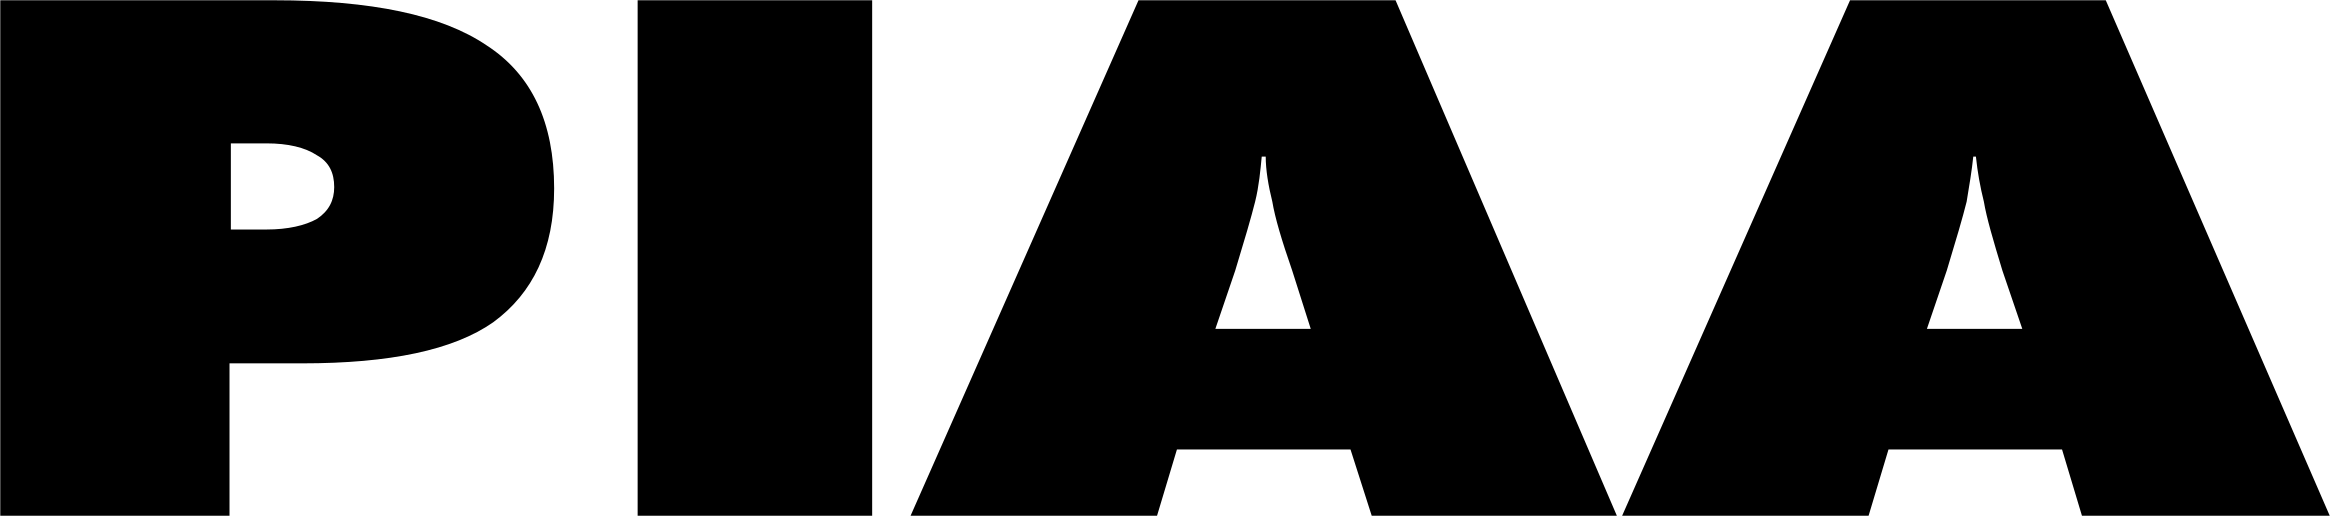 PIAA logo